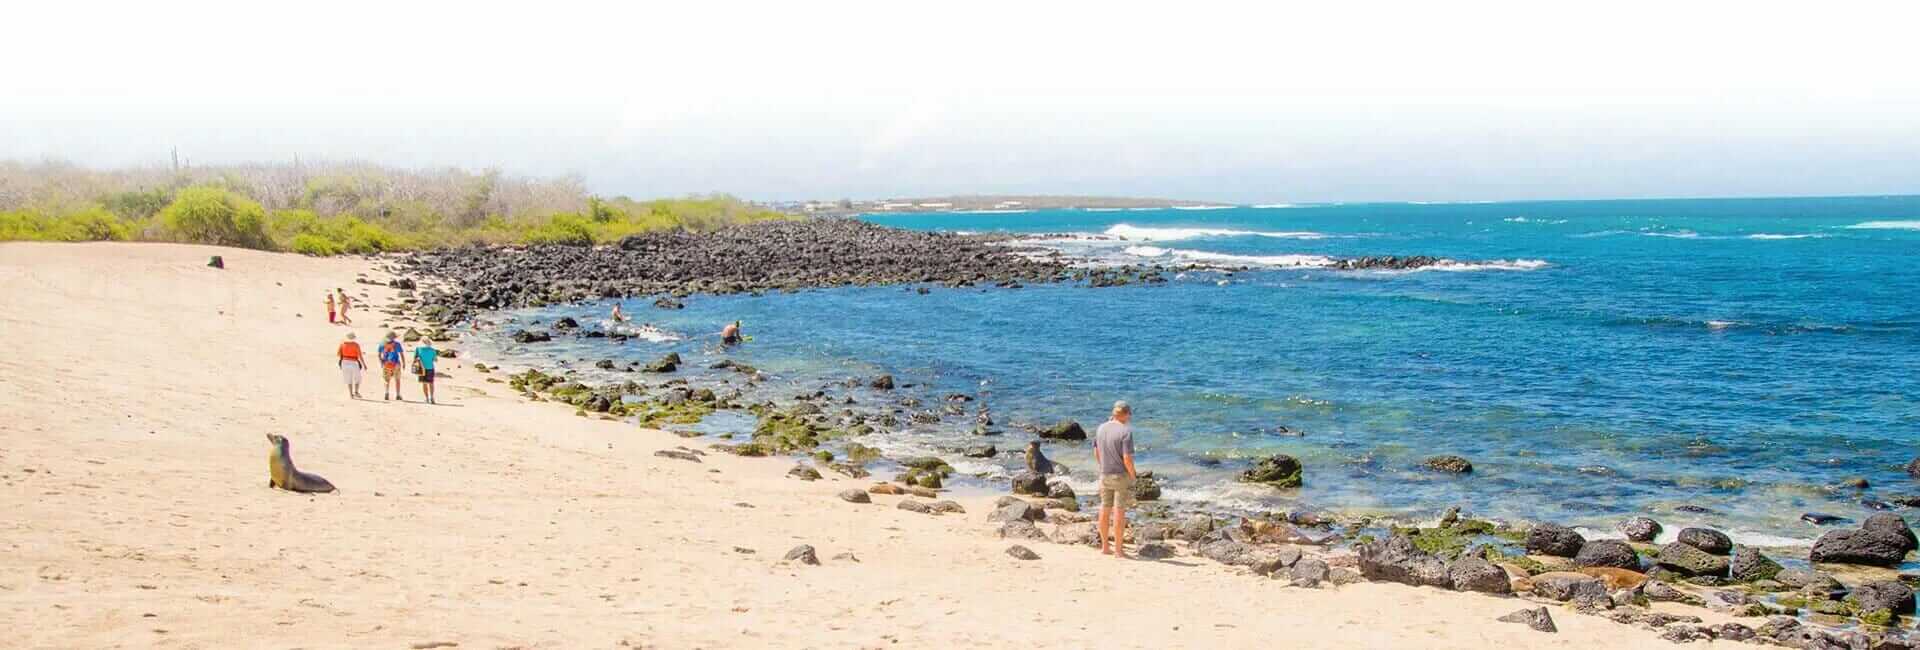 galapagos islands golden beach